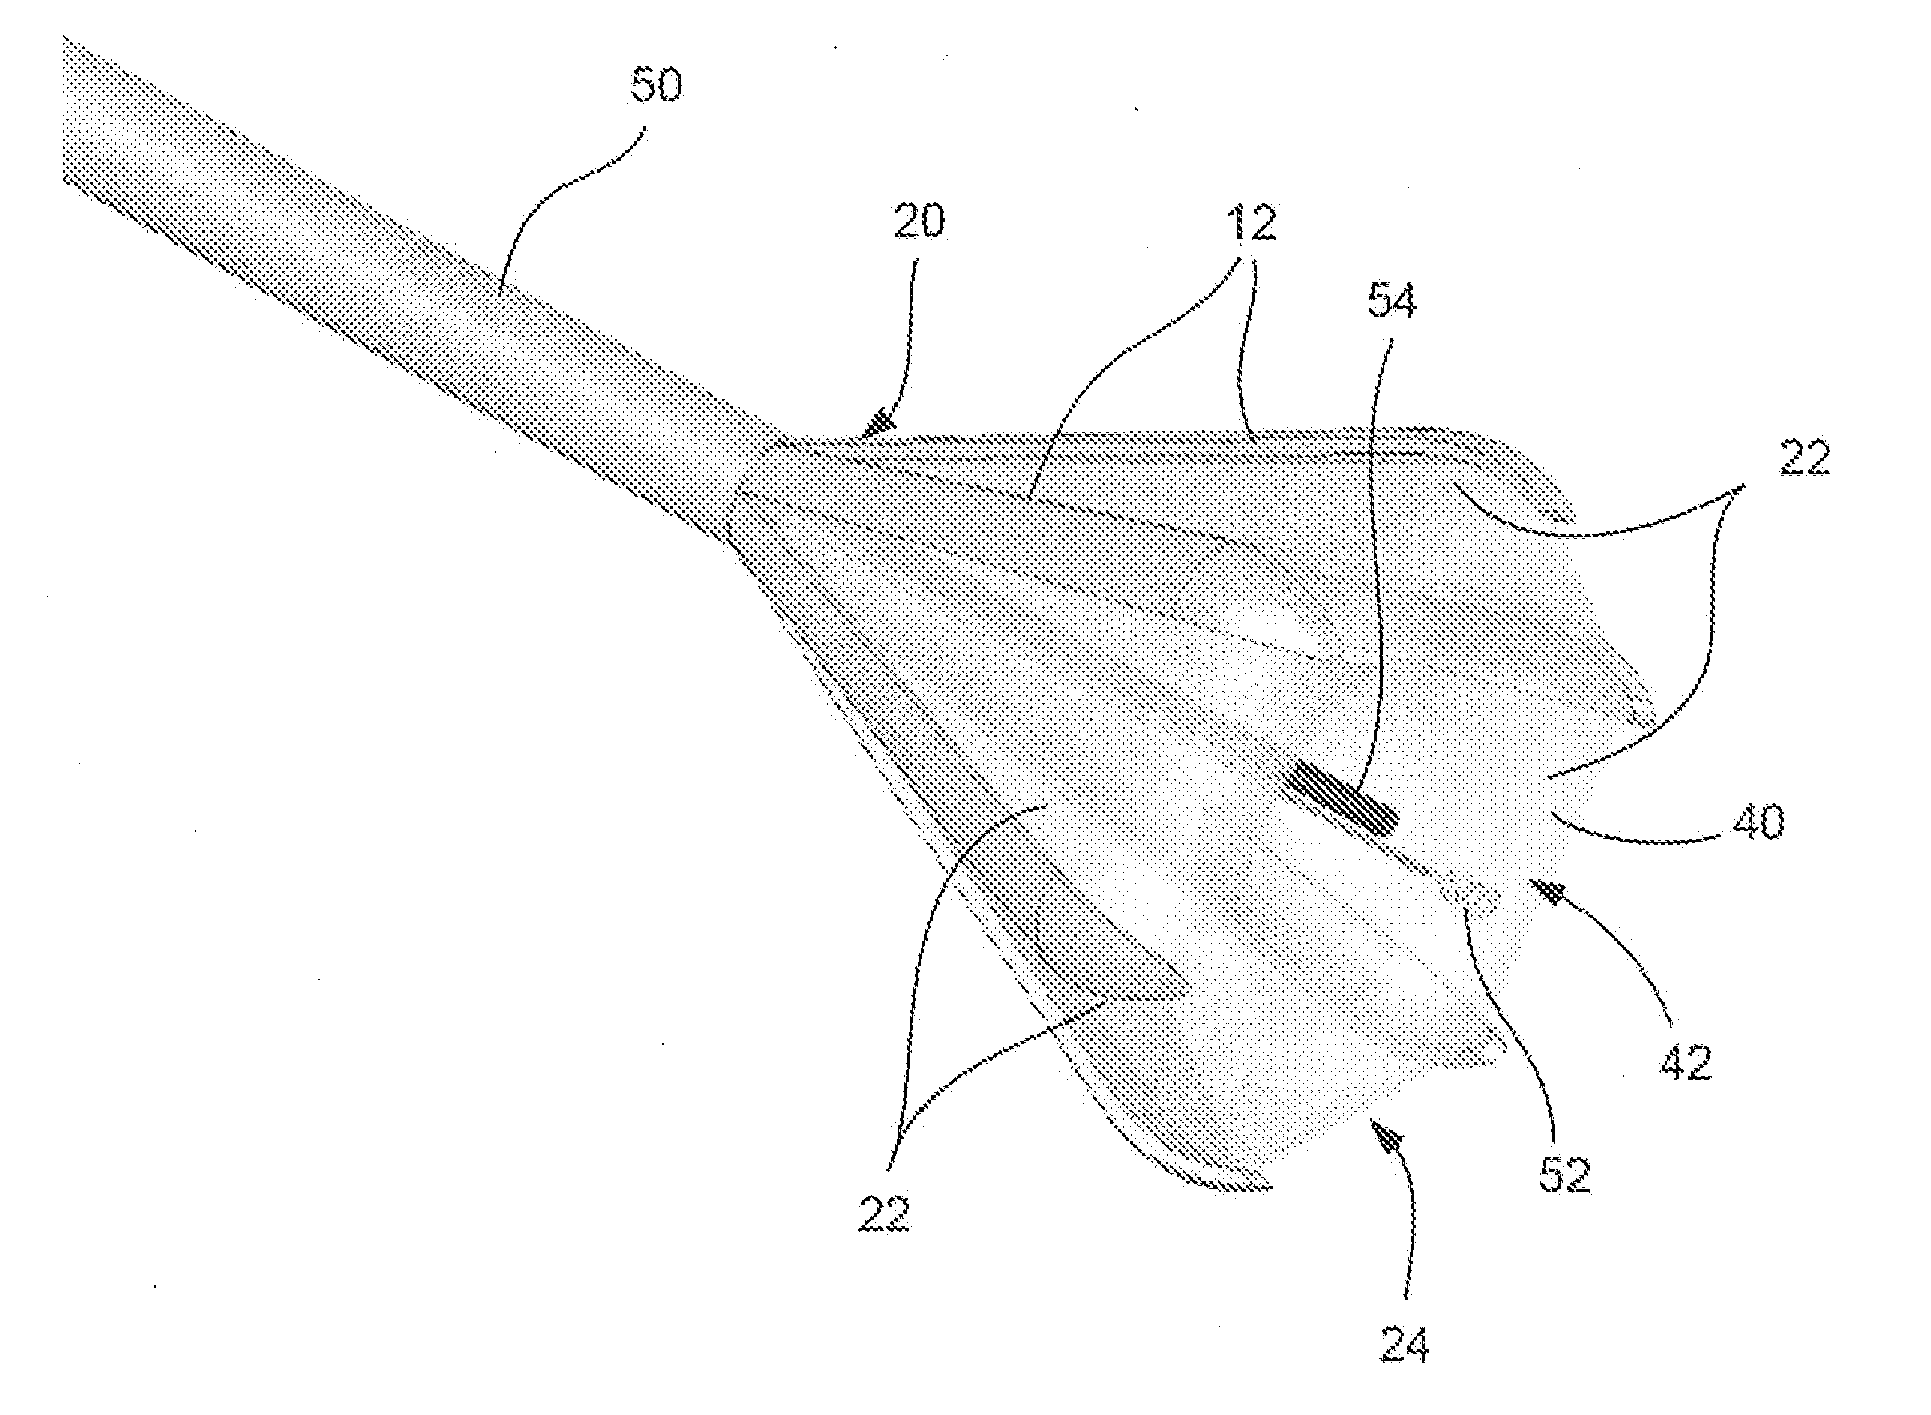 Tissue visualization device having multi-segmented frame